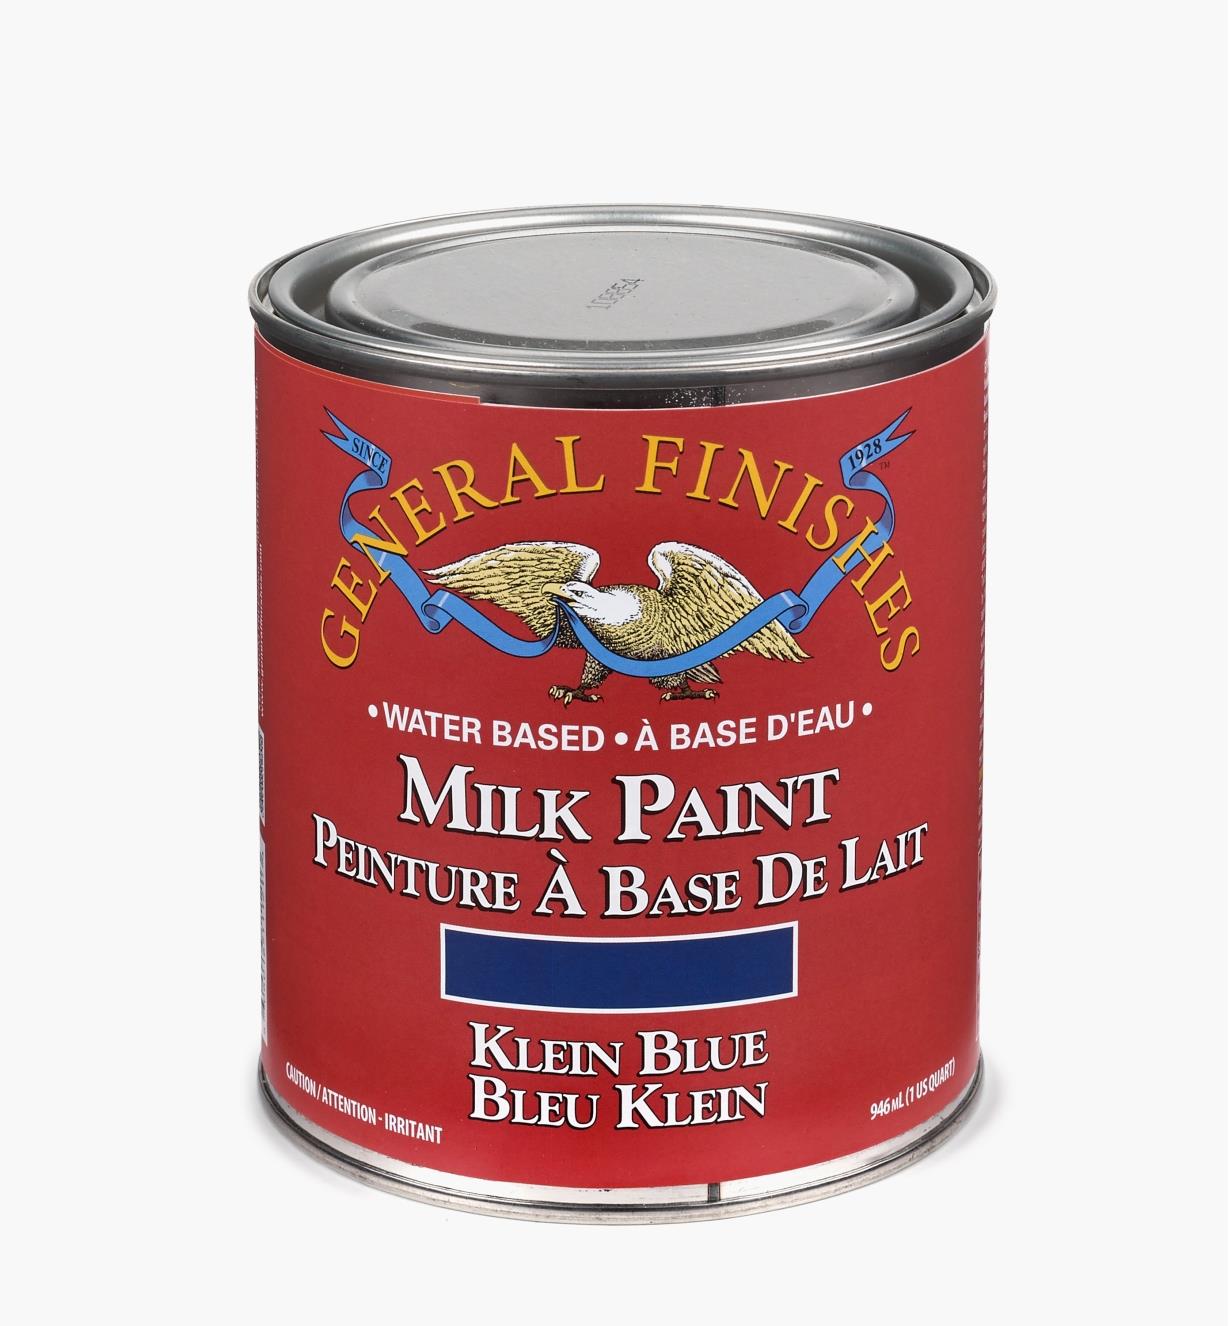 56Z1729 - Peinture de lait General, bleu Klein, la pinte